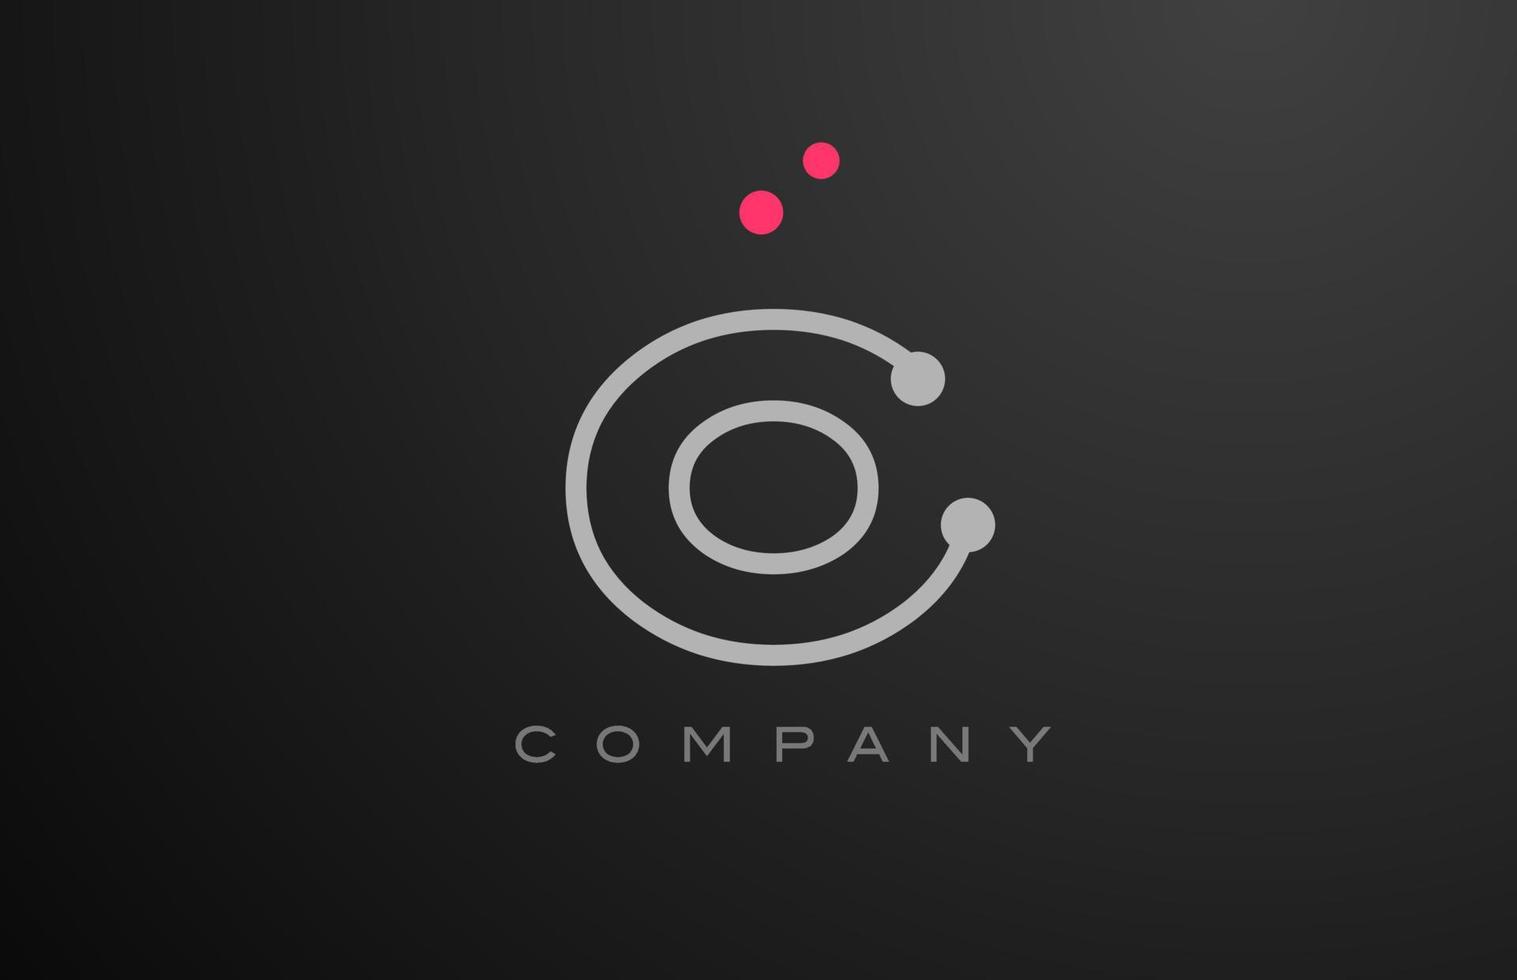 gris o alfabeto letra logo icono diseño con rosado punto. creativo modelo para negocio y empresa vector